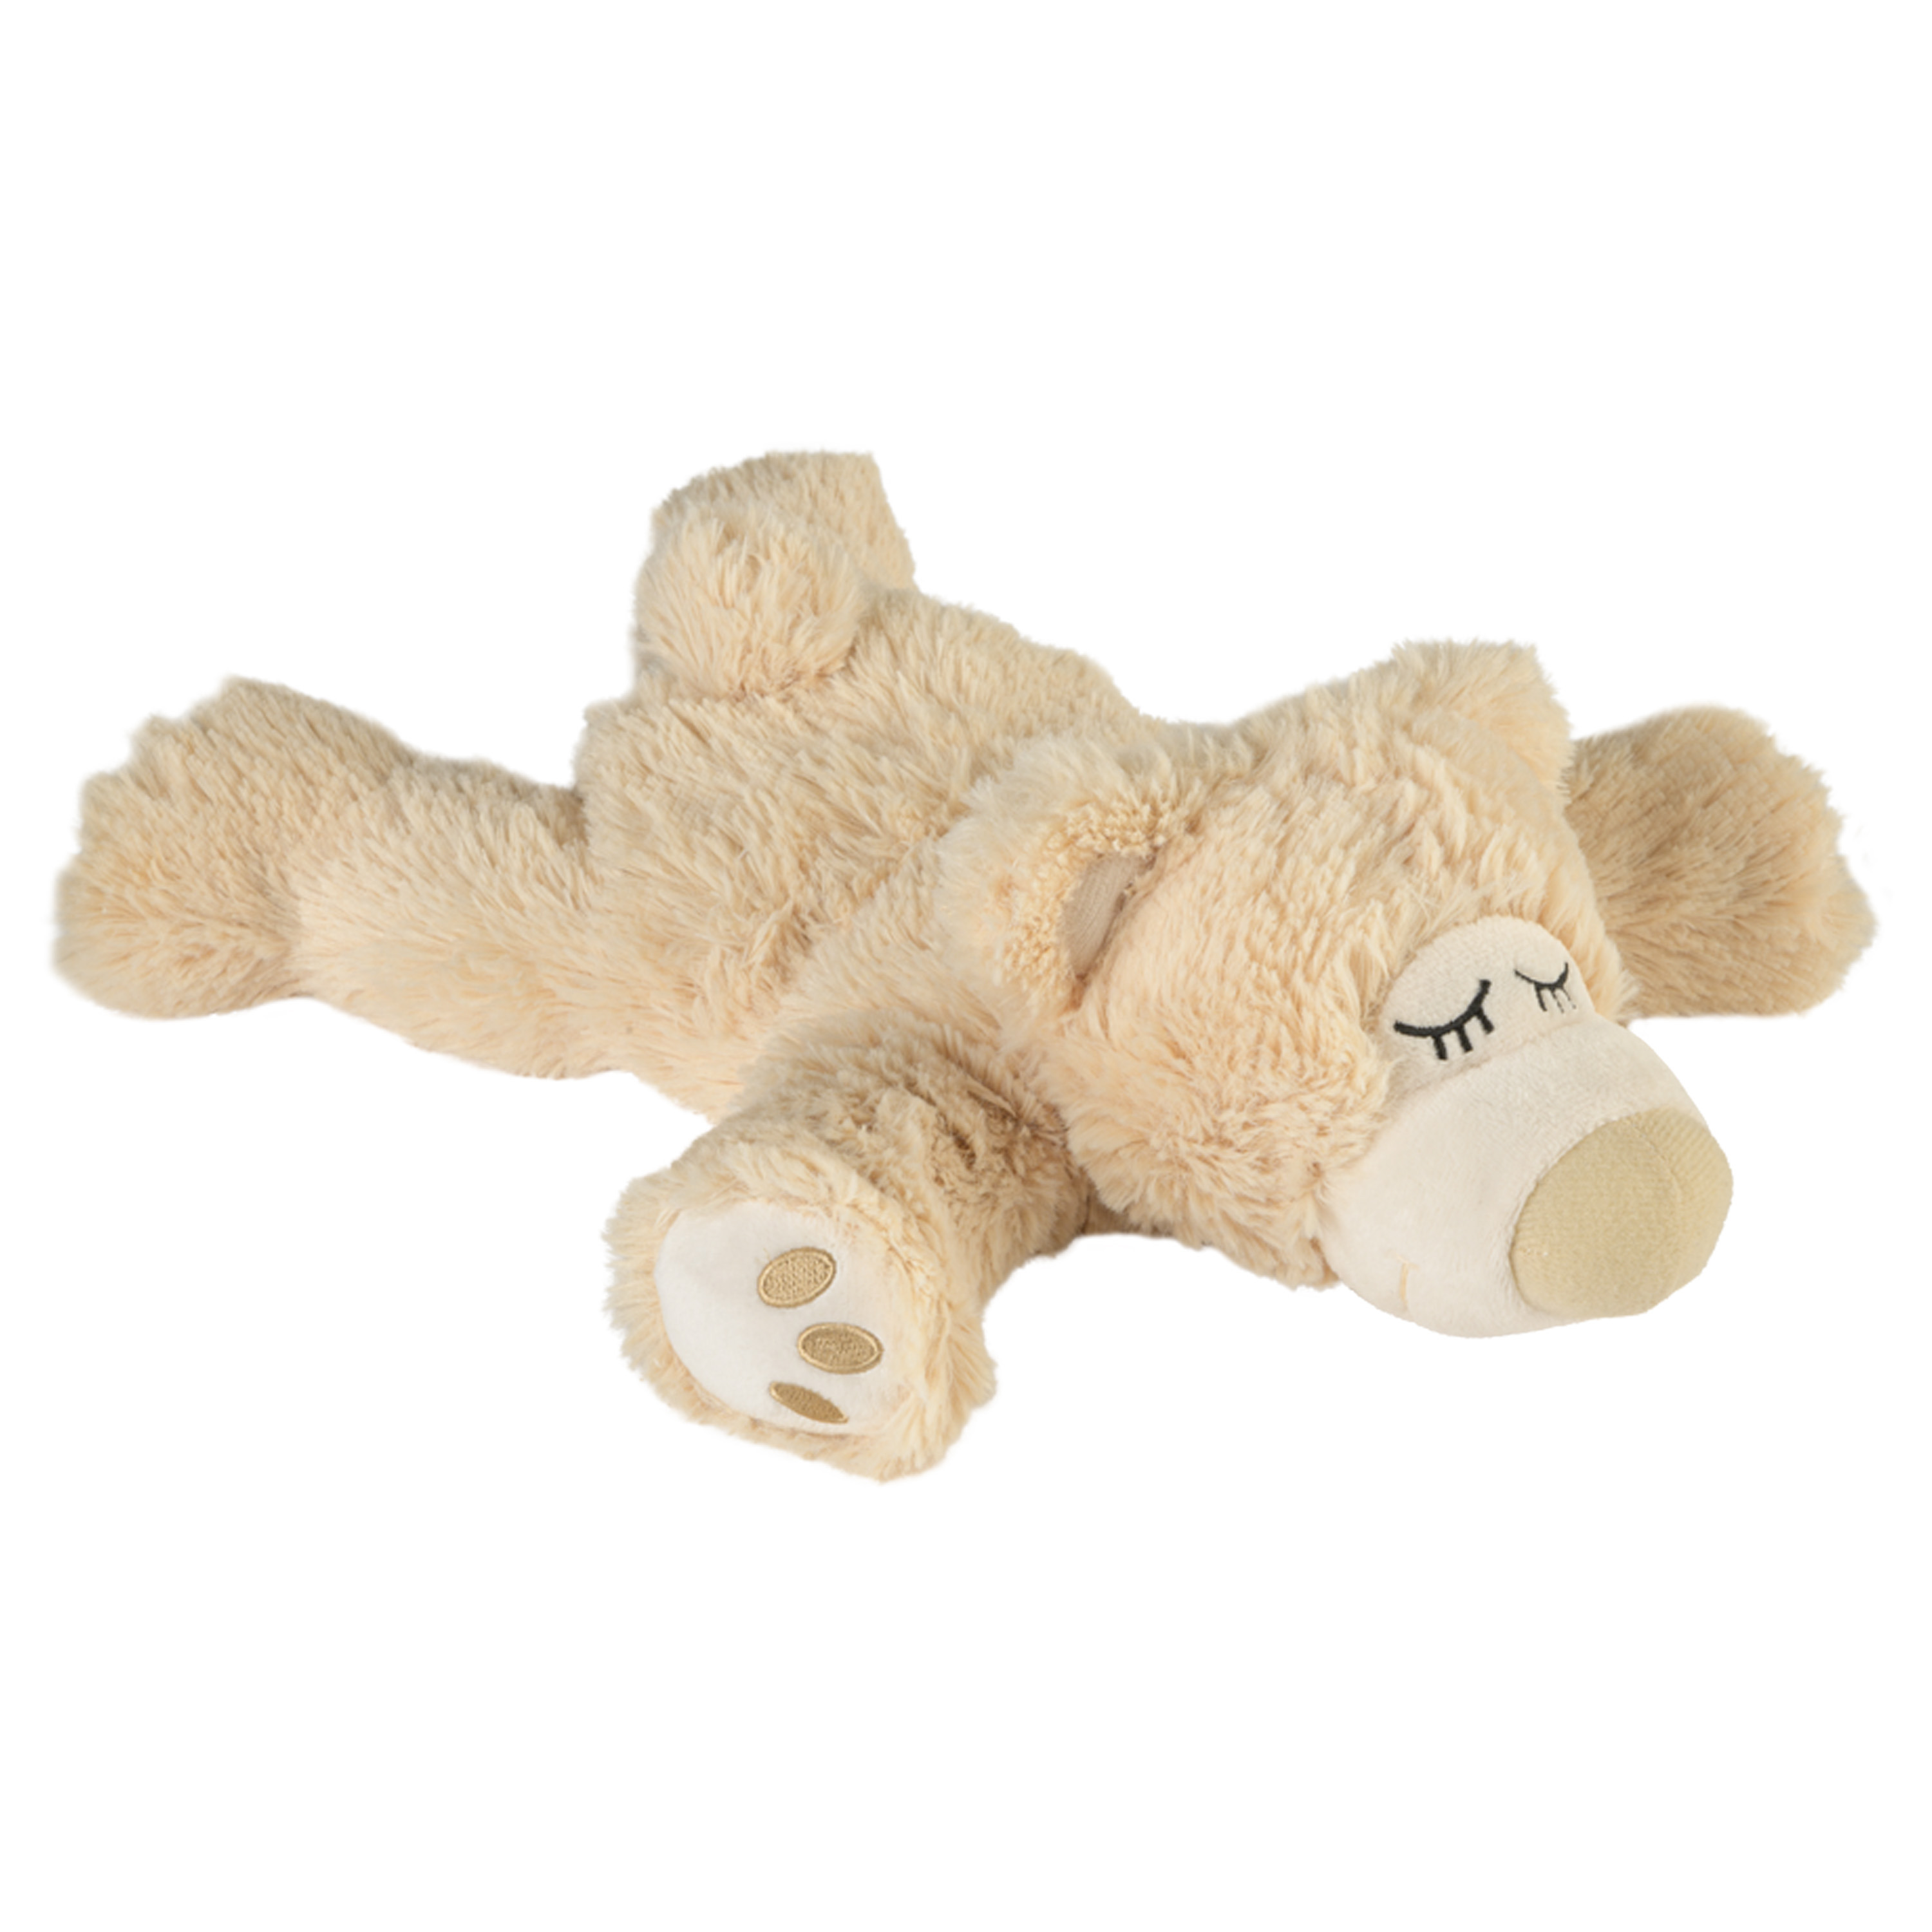 Warmies Warmte-magnetron opwarm knuffel teddybeer beige 30 cm pittenzak